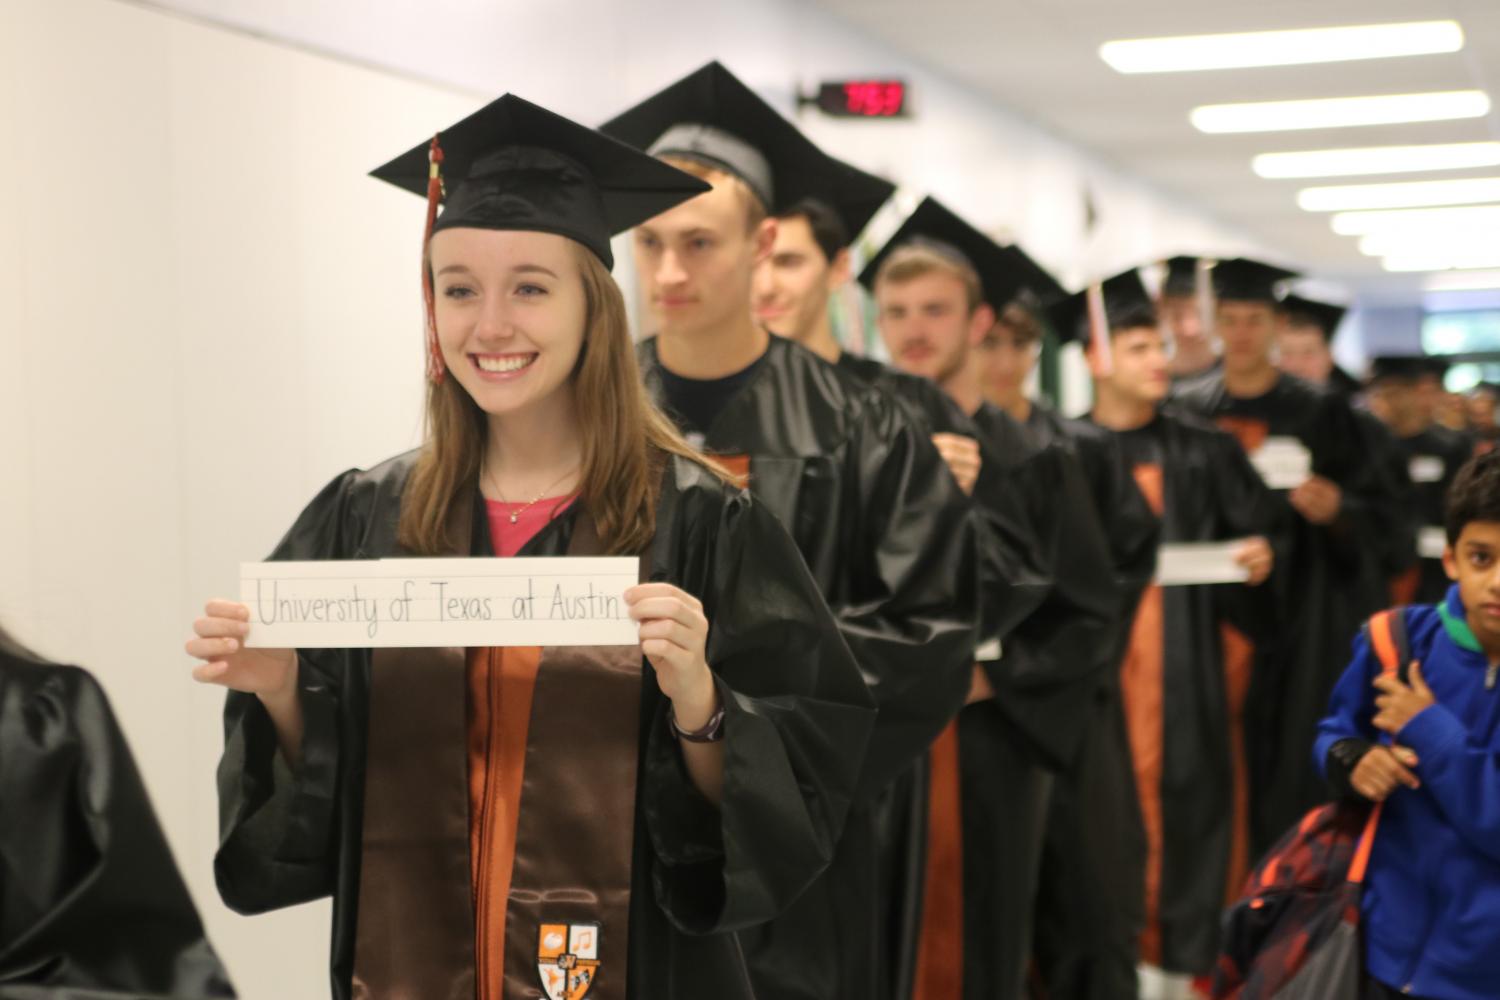 Lauren Price 17 walks through the hallways with her college sign.